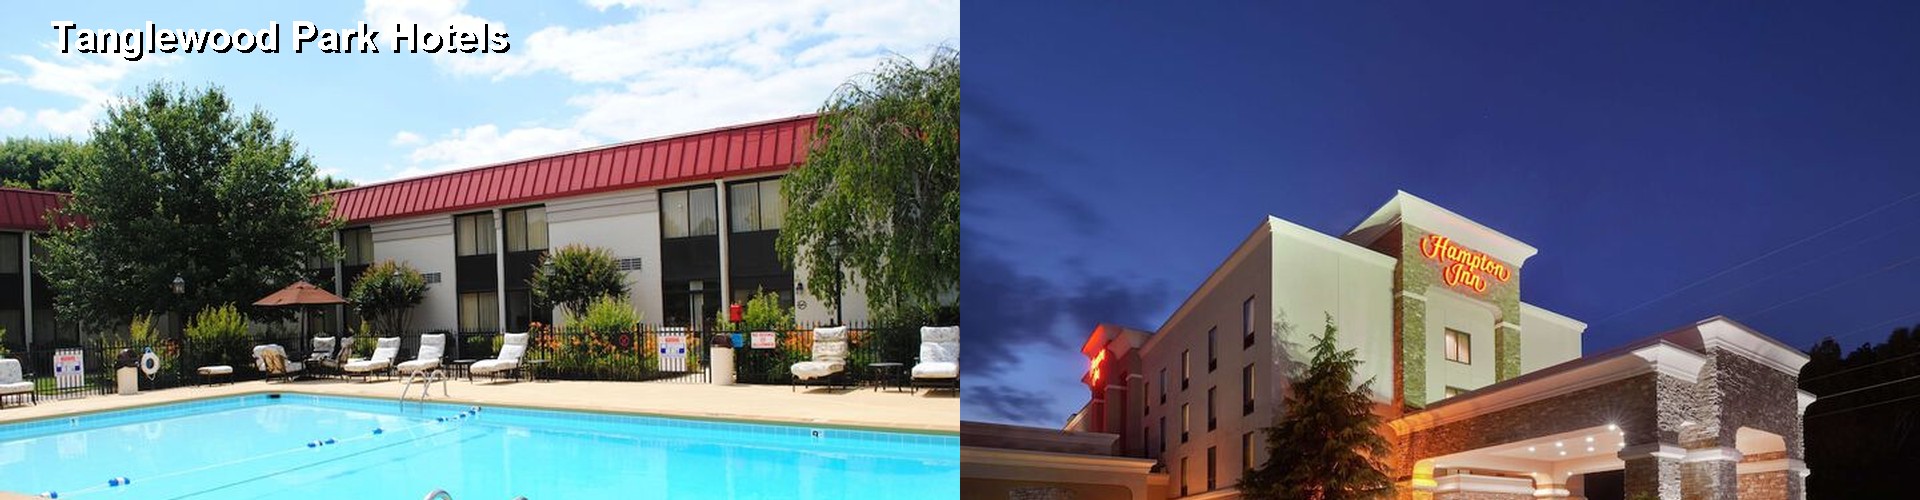 5 Best Hotels near Tanglewood Park